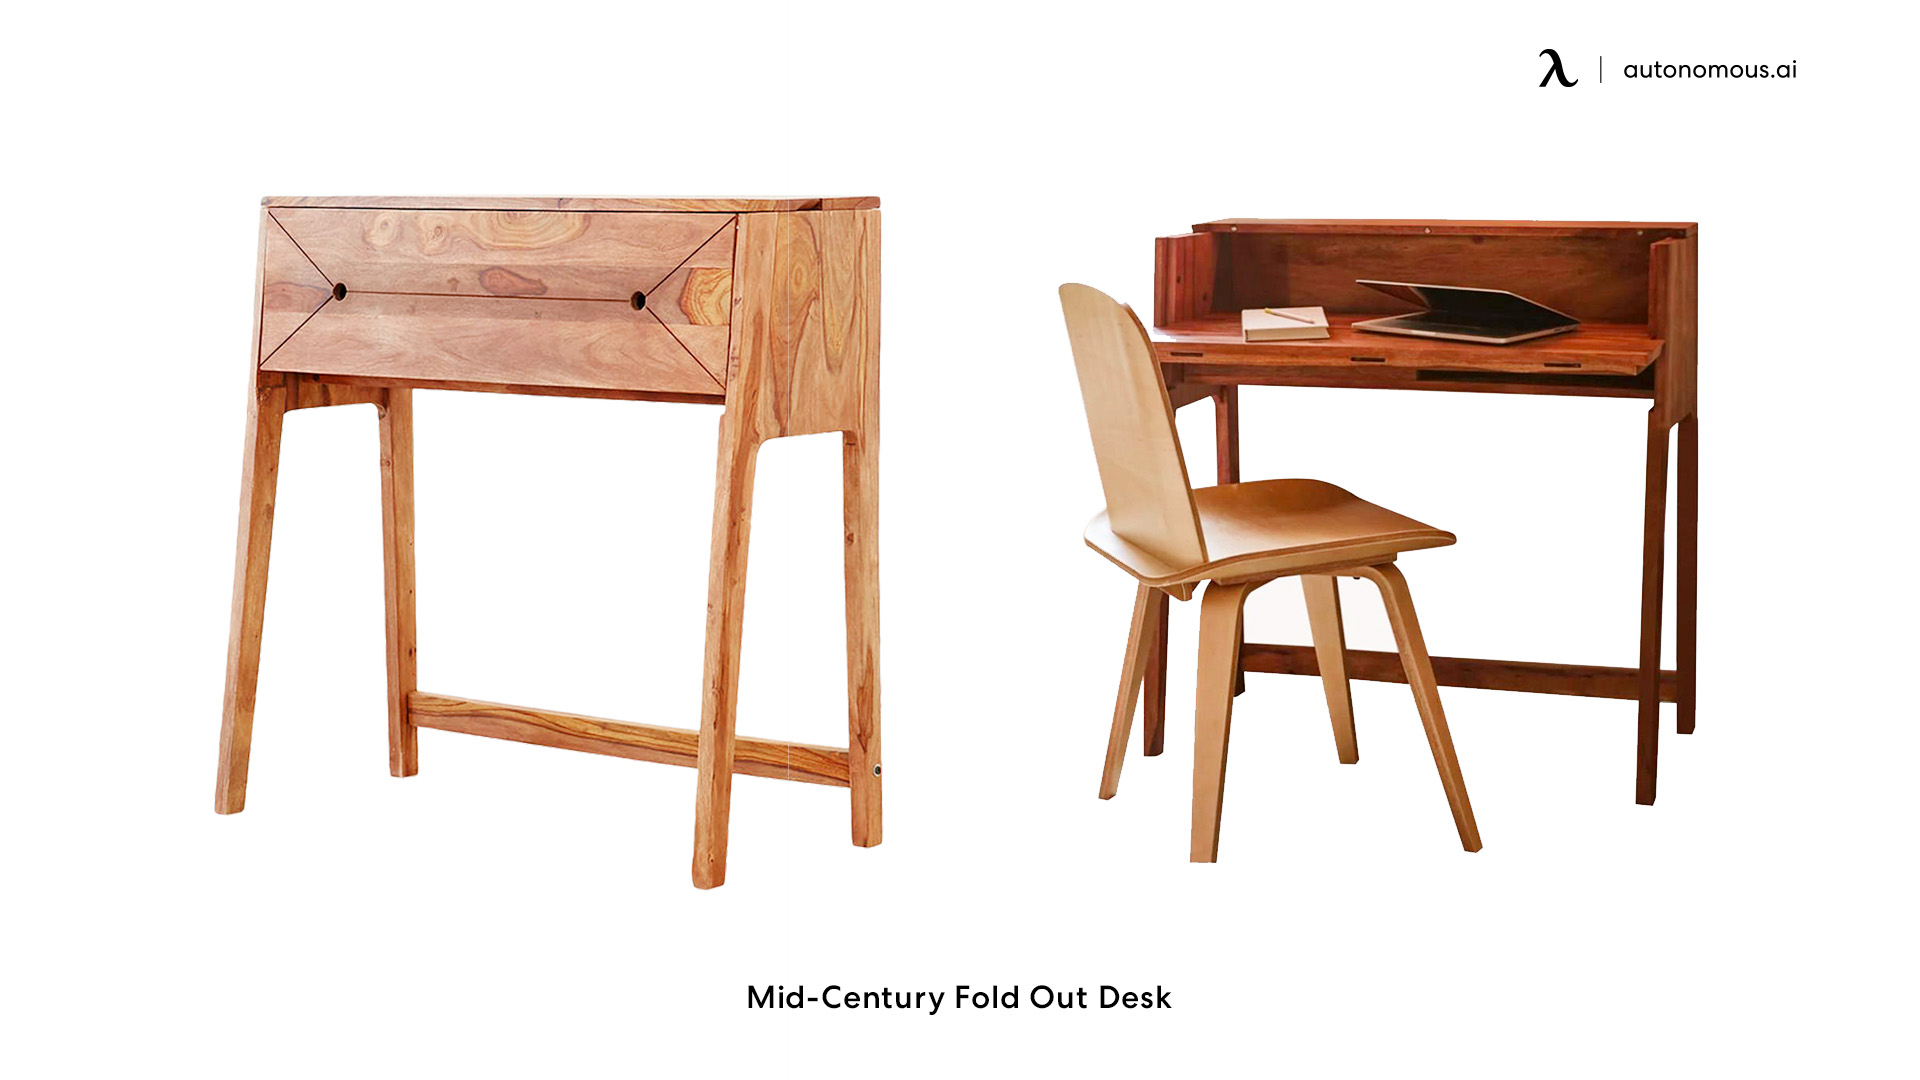 Mid-Century Fold Out Desk home office desk ideas